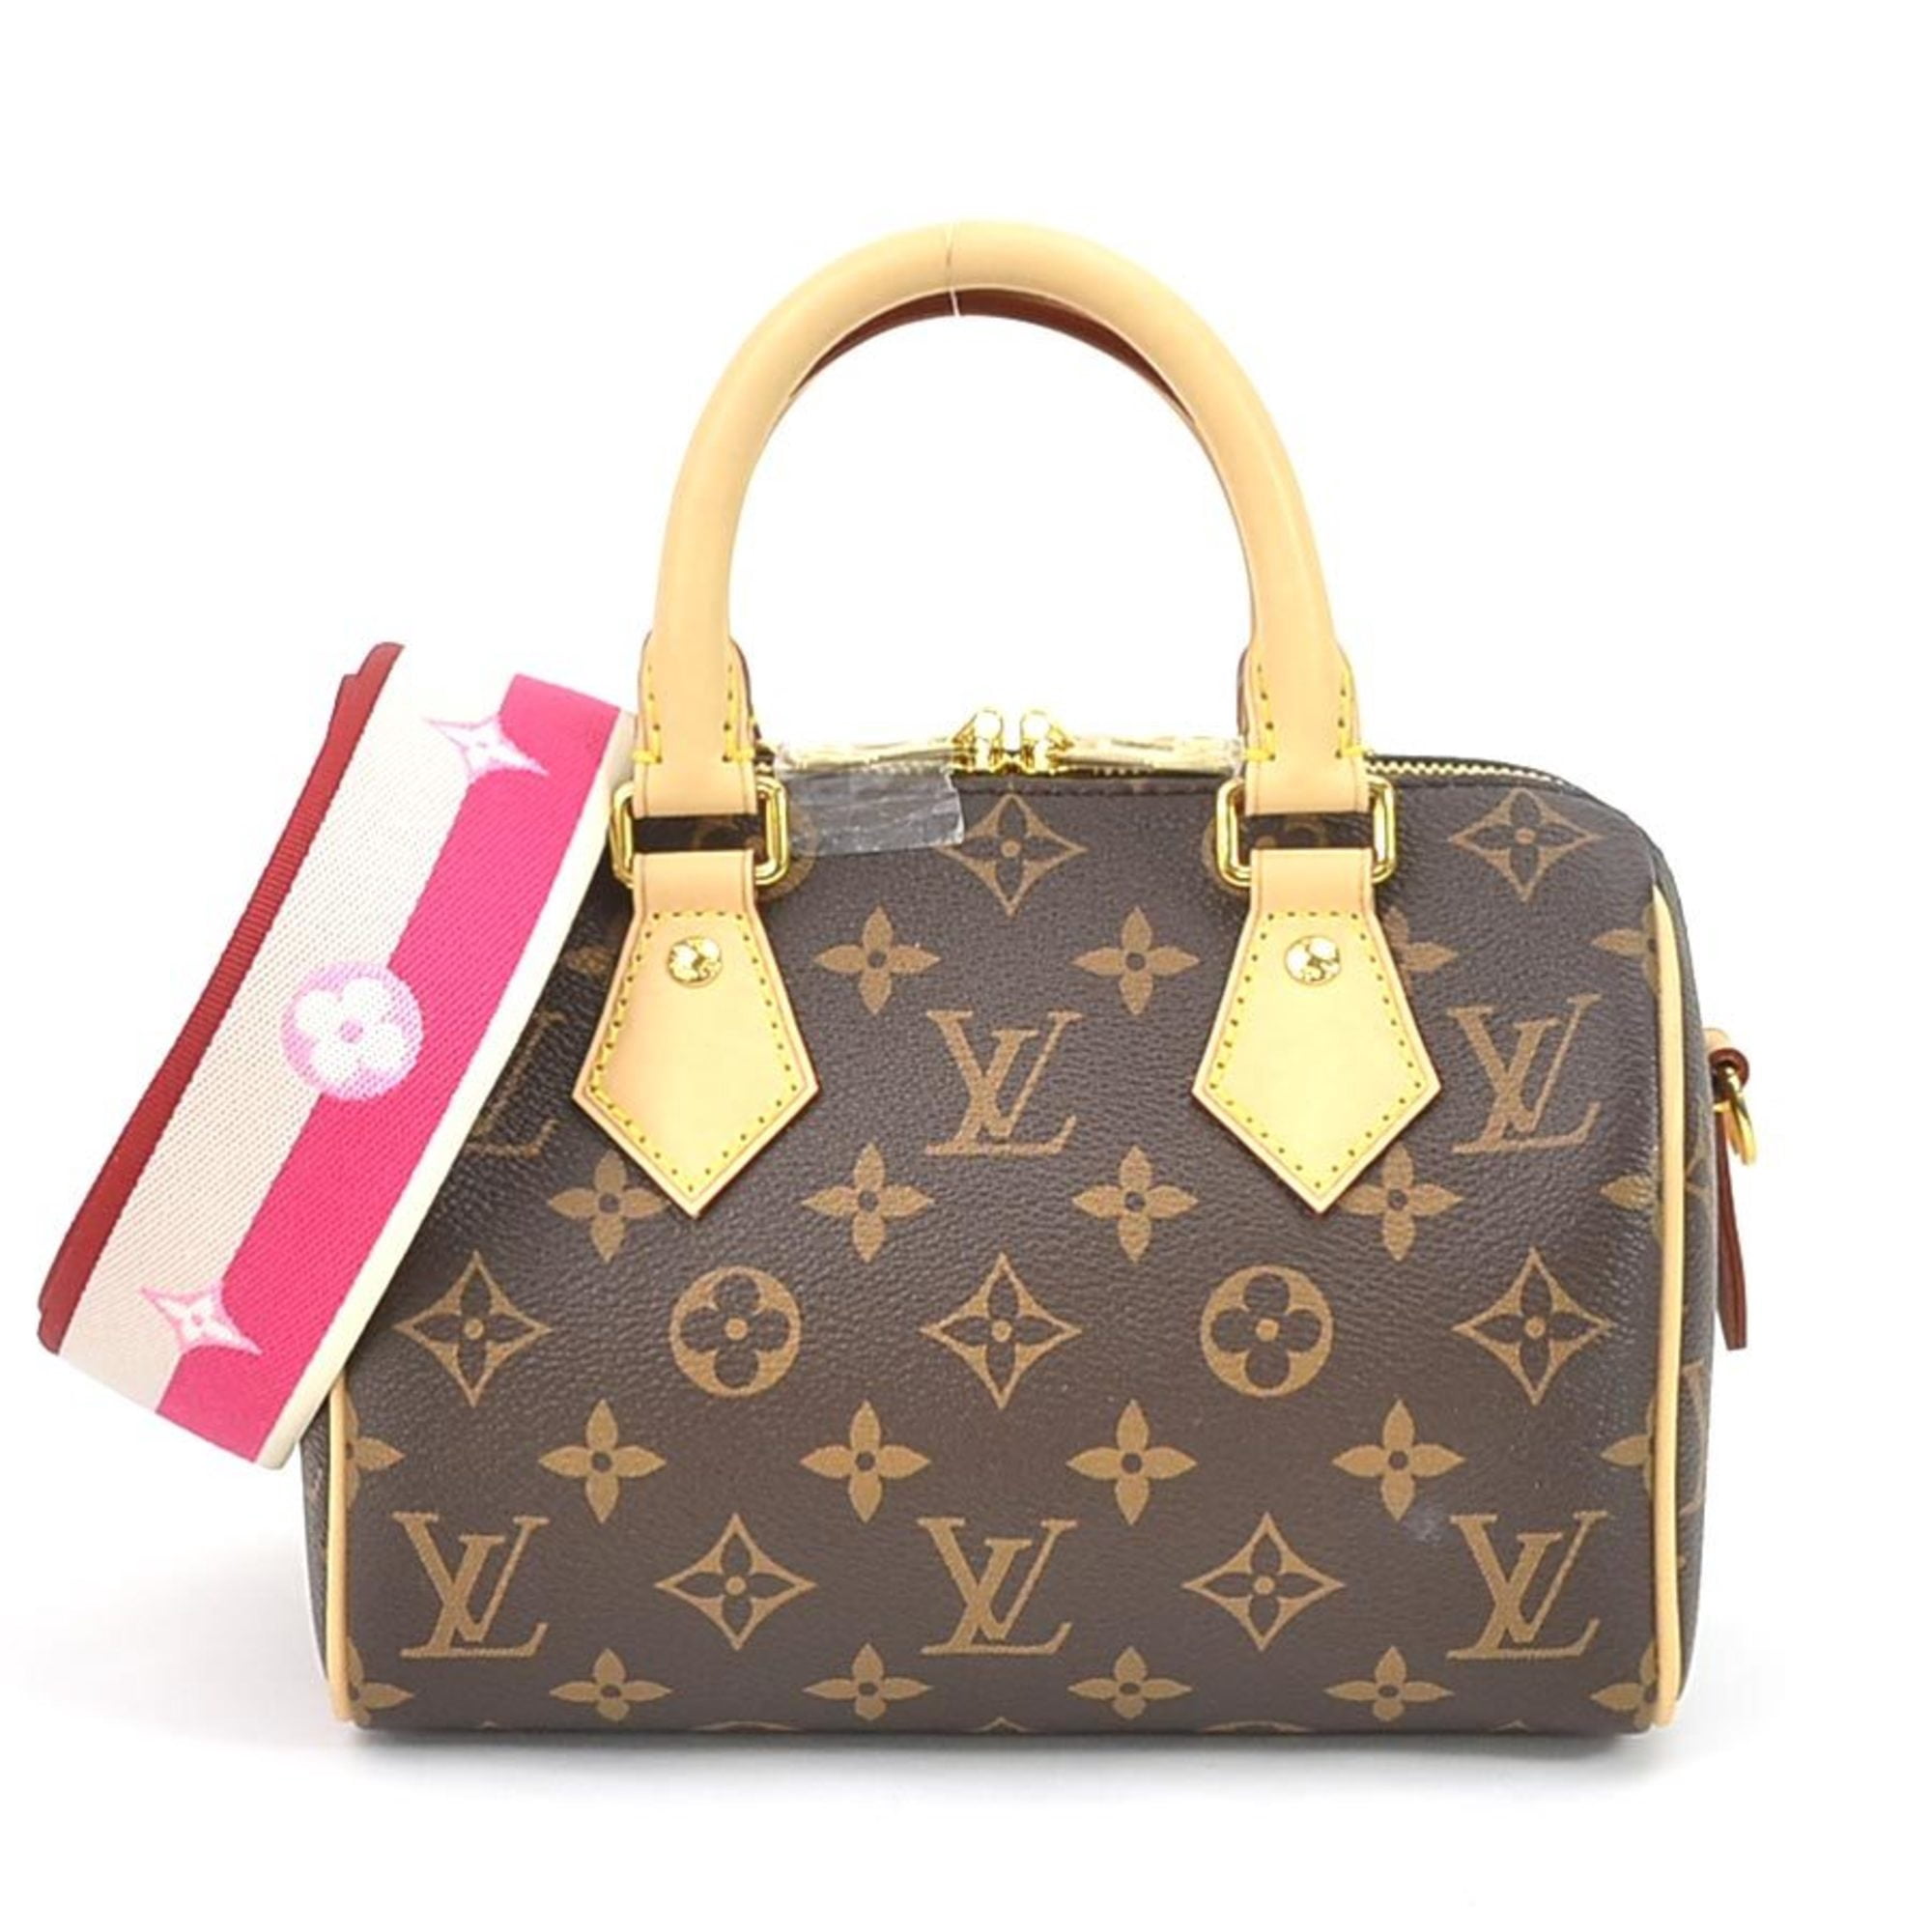 used Pre-owned Louis Vuitton Louis Vuitton Handbag Crossbody Shoulder Bag Monogram Speedy Bandouliere 20 Canvas Brown M45948 (Like New), Women's, Size